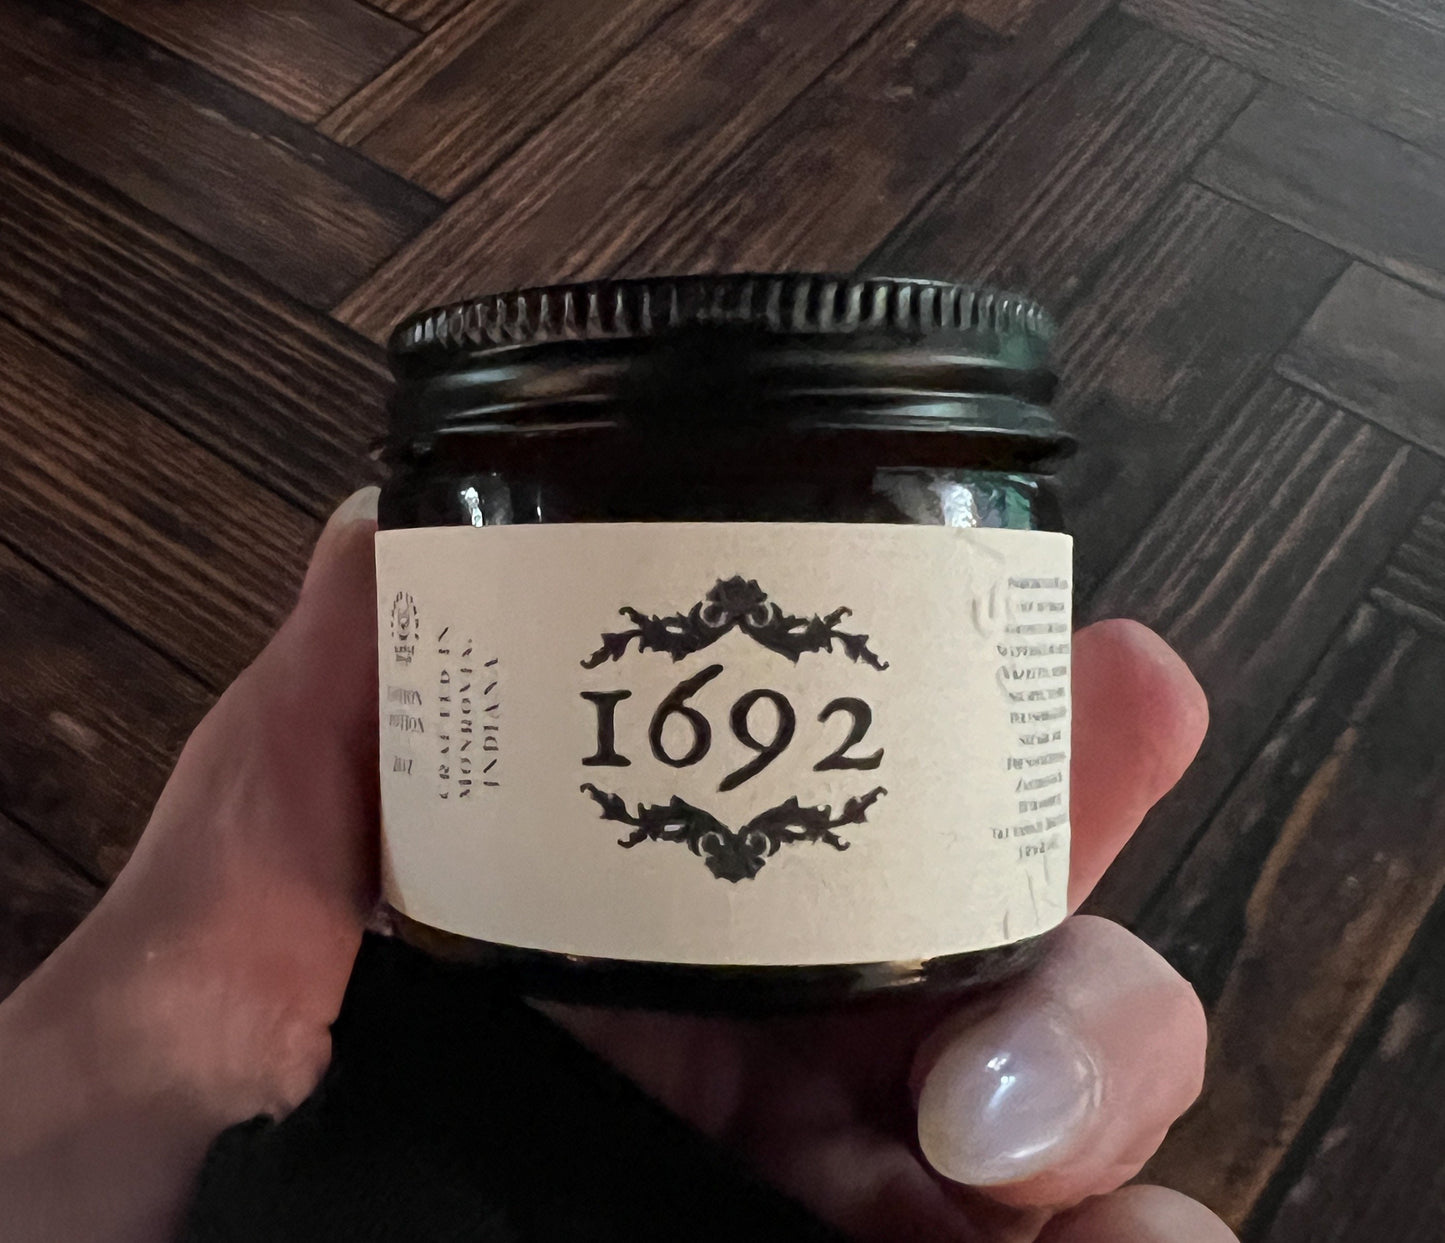 1692, fragranced unisex, dry skin care lotion